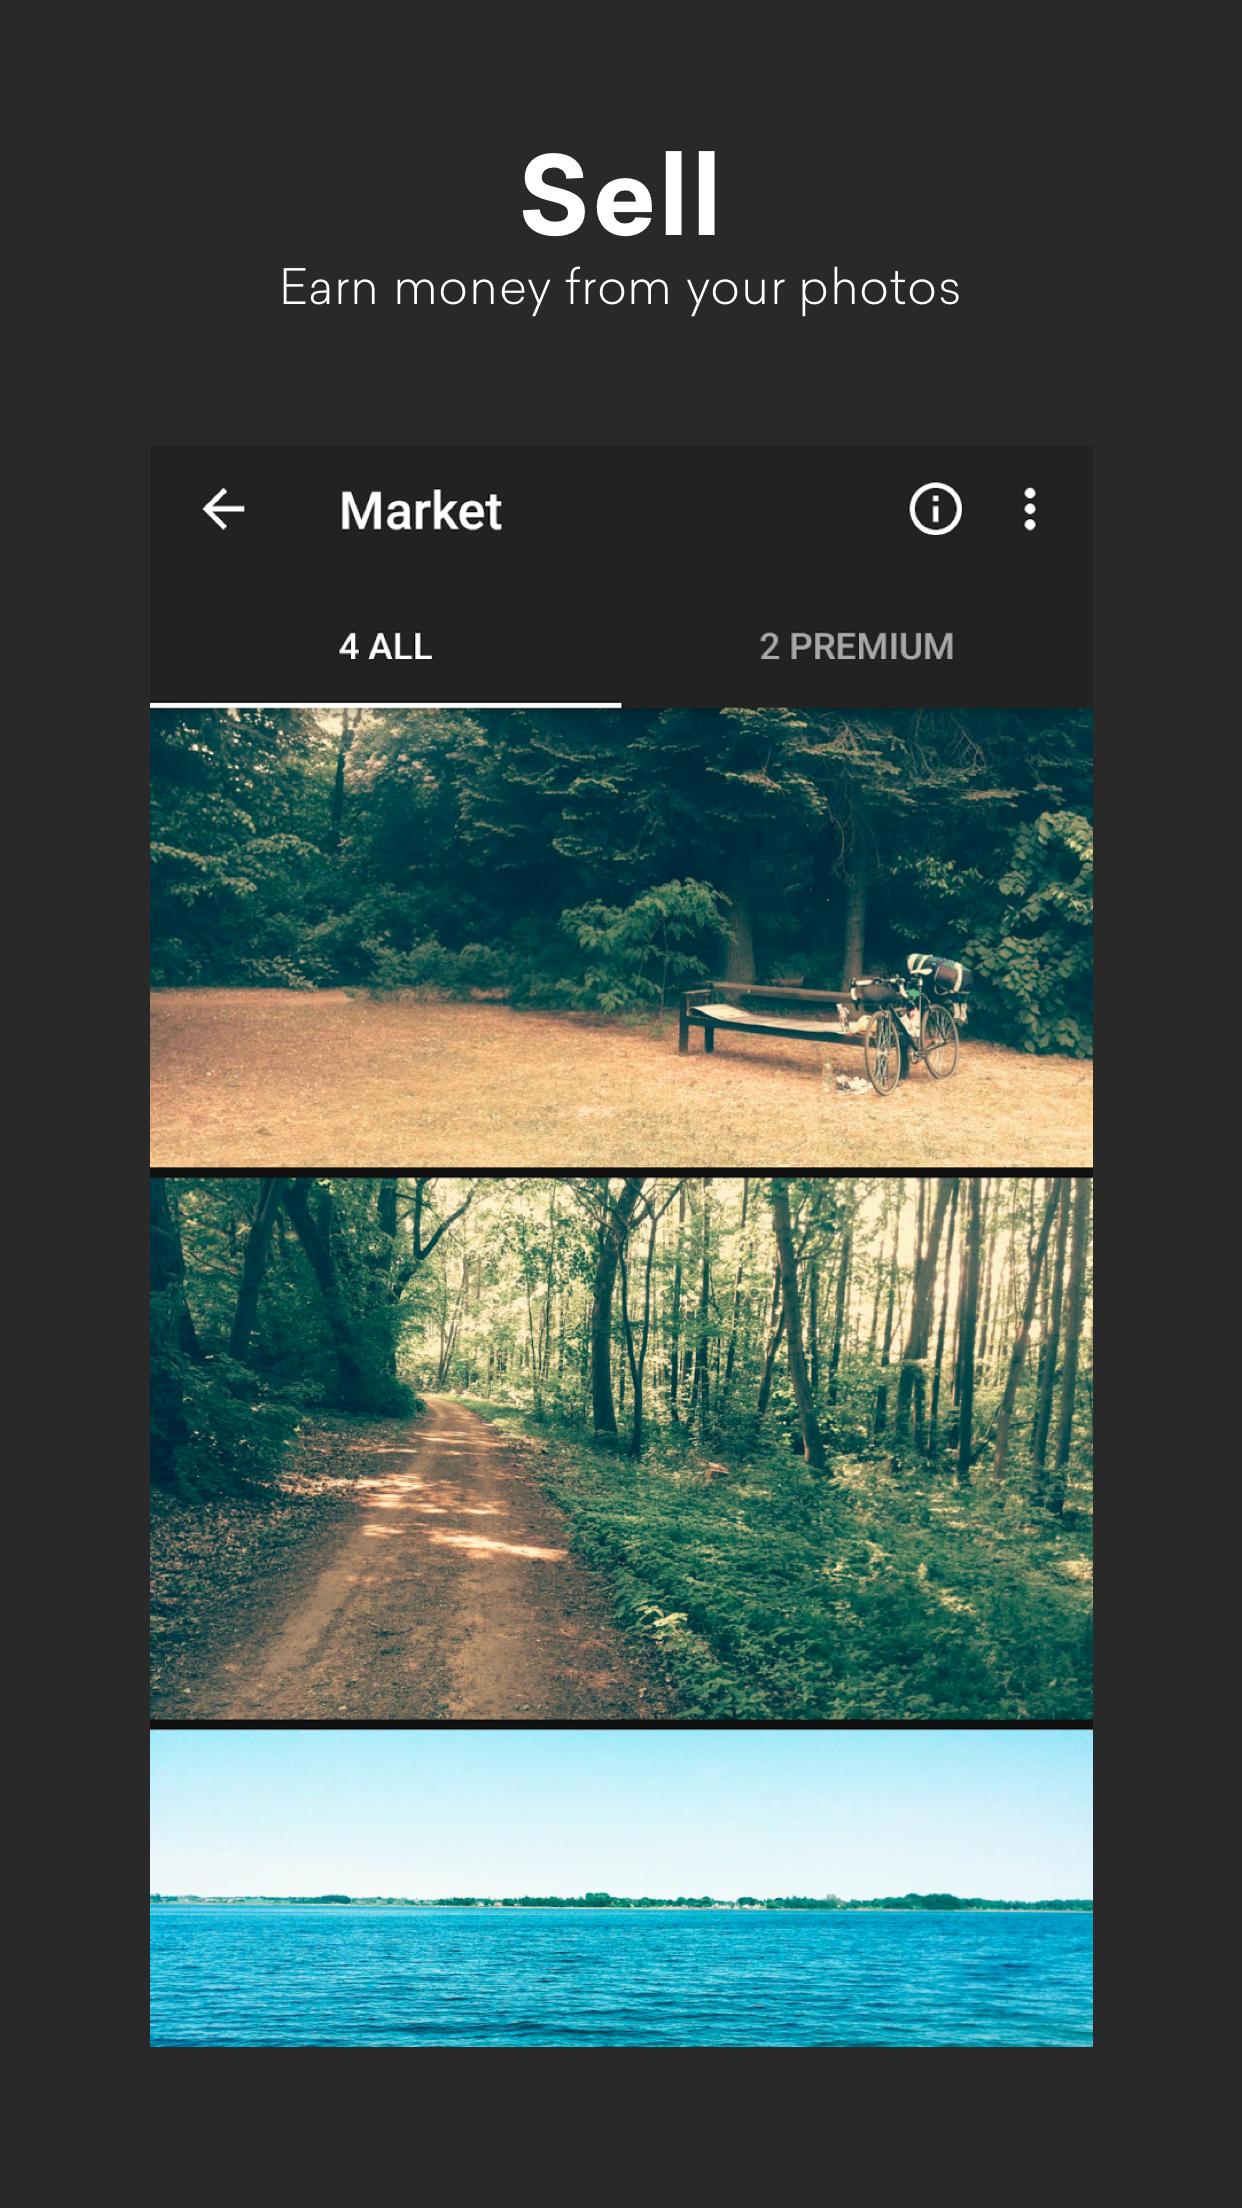 EyeEm Free Photo App For Sharing & Selling Images 8.1 Screenshot 2